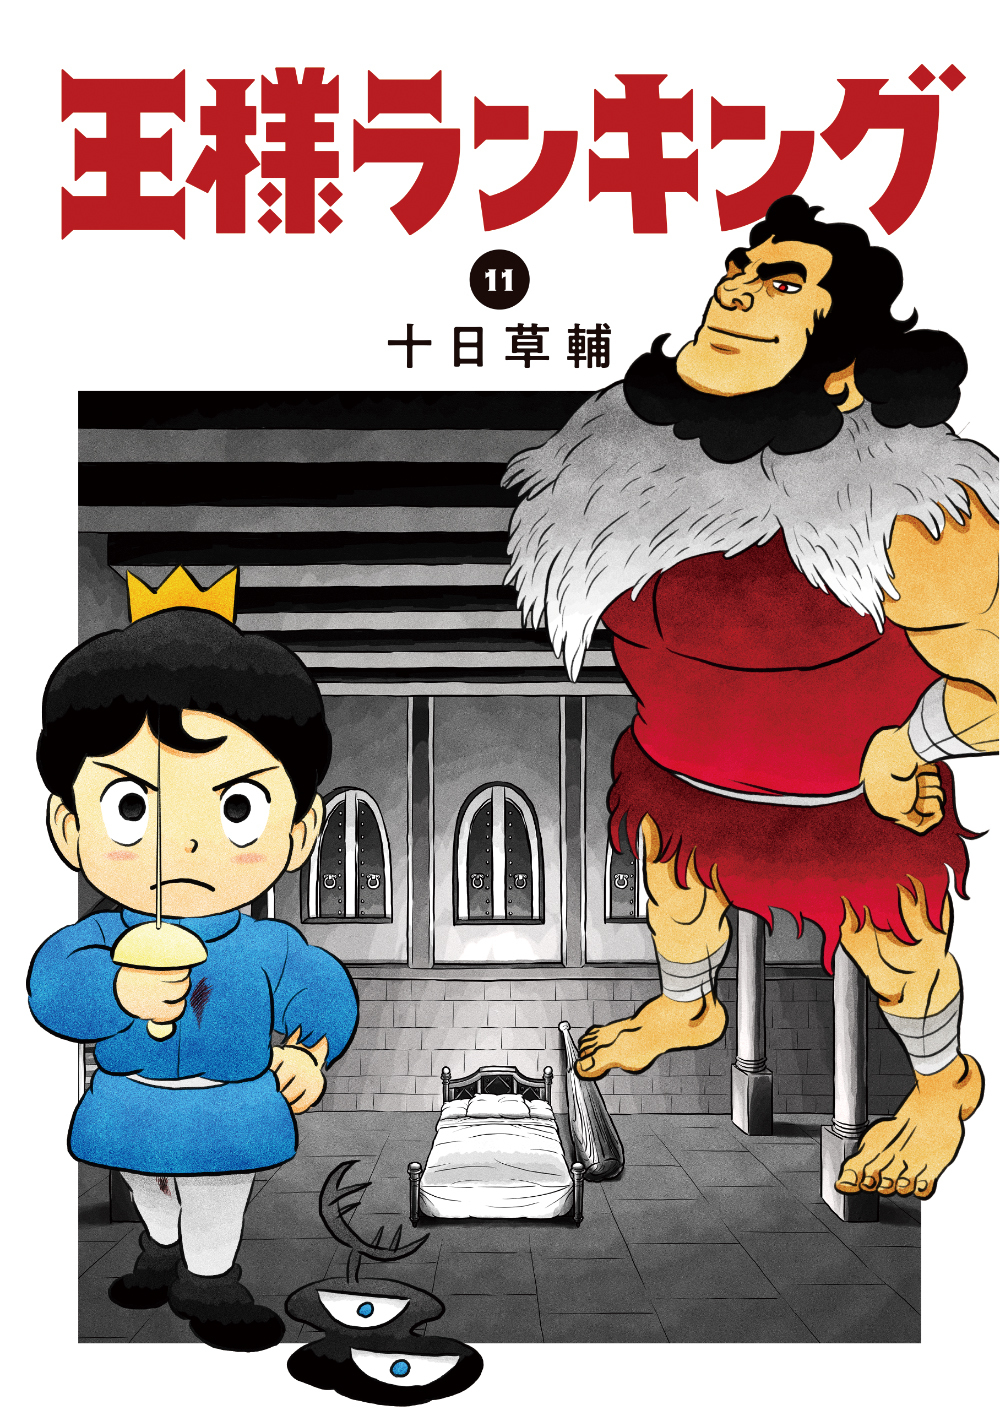 Tsutaya 話題のコミック2作品 9月15日 水 レンタル開始 ちはやふる 最新刊47巻 憧れの場所に三人が集い 物語はクライマックスへ 王様ランキング 最新刊11巻 10月期tvアニメ化放映決定 在庫検索はtsutayaアプリで T Co